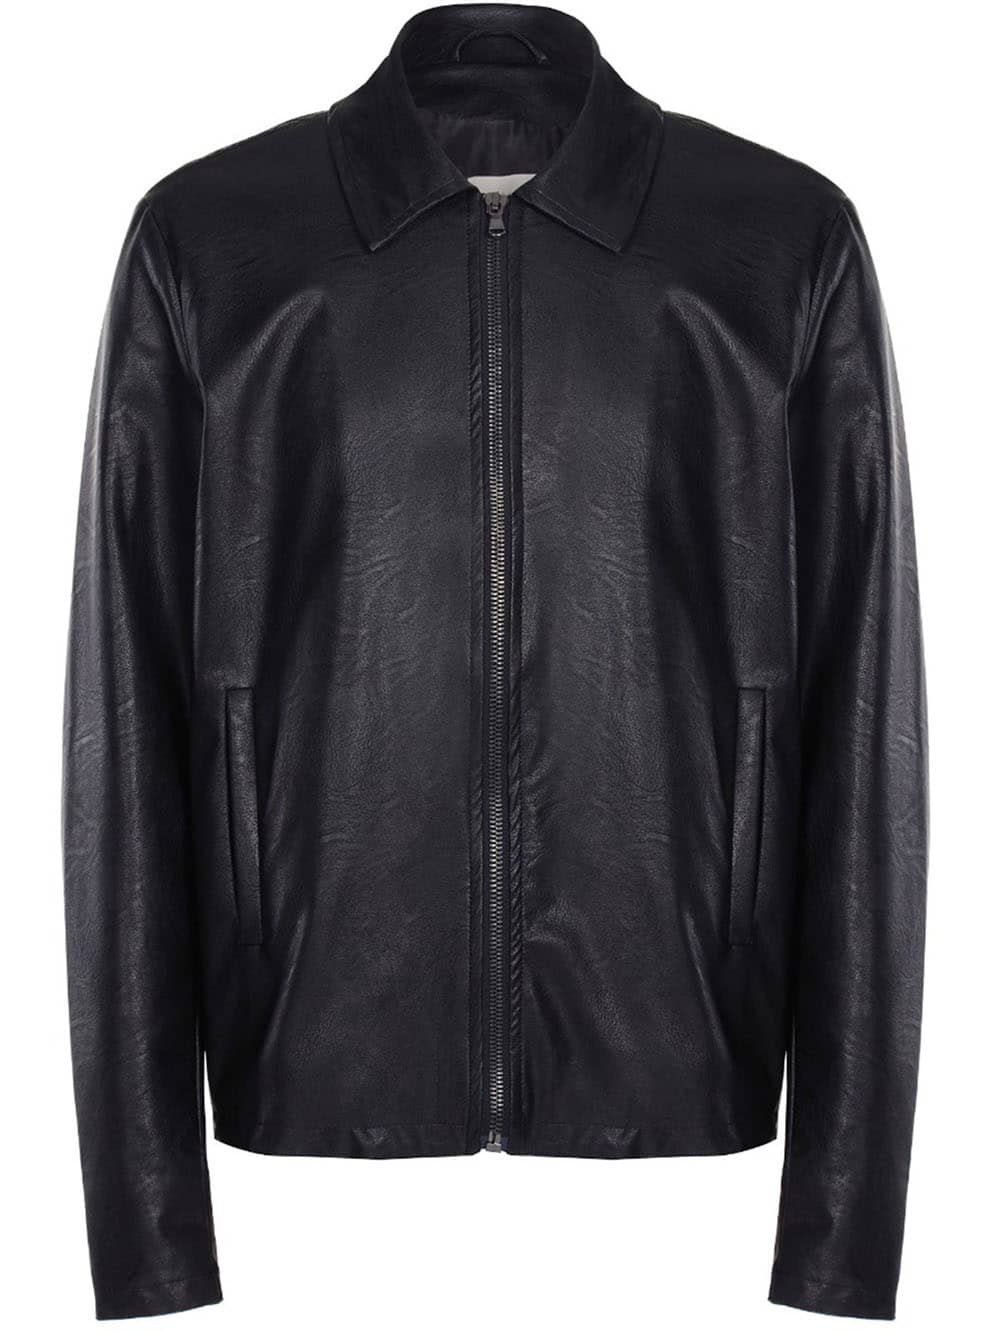 Black shirt collar vegan leather jacket men from Will's